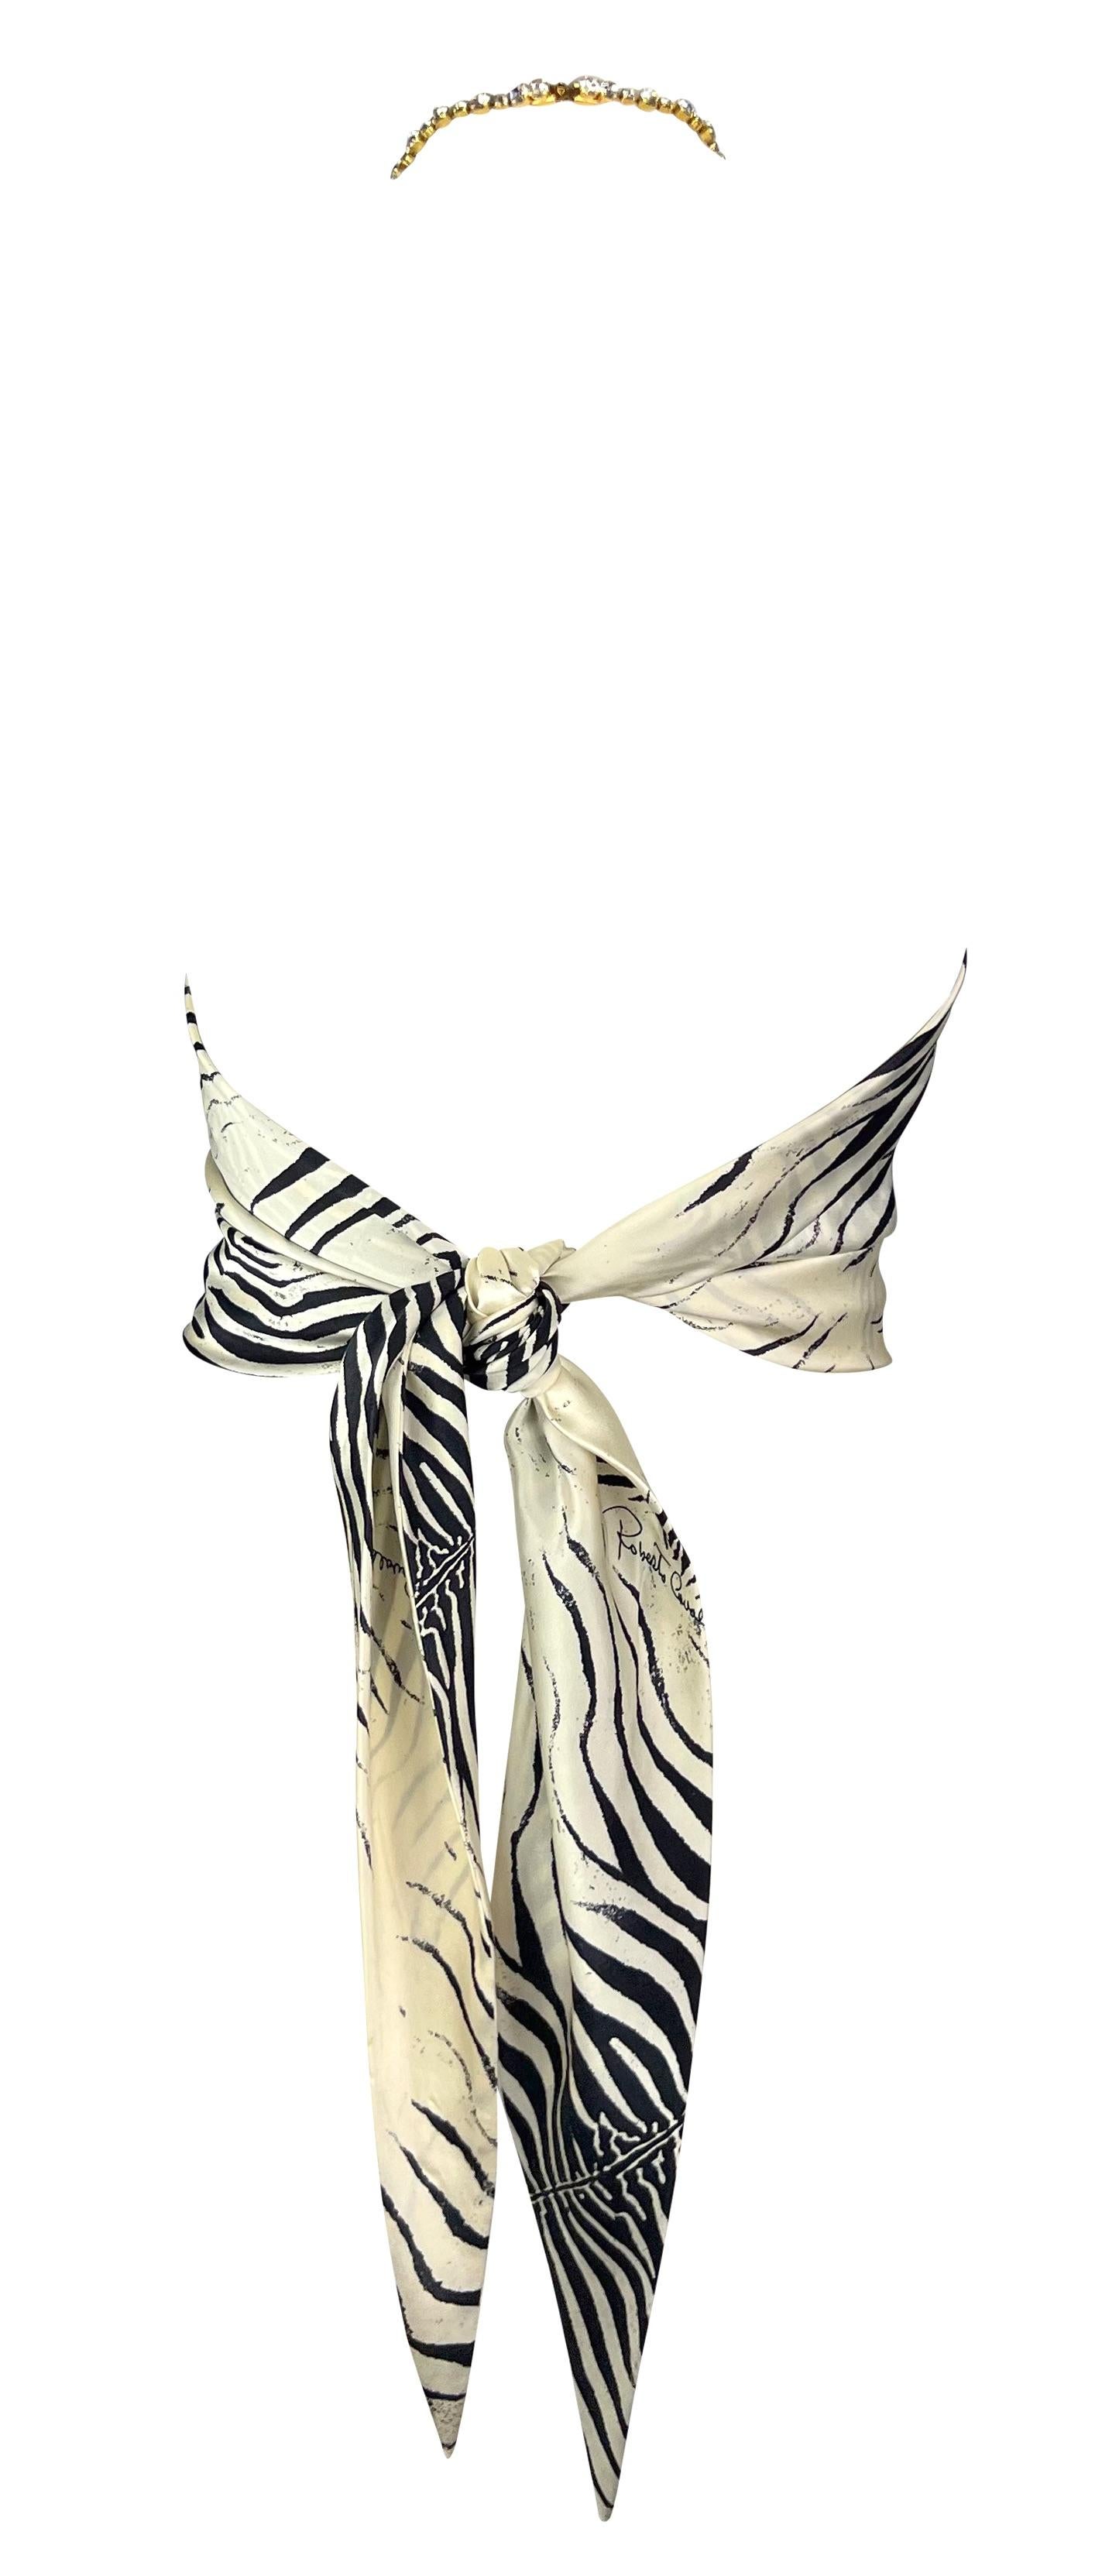 S/S 2000 Roberto Cavalli Rhinestone Zebra Print Triangle Silk Scarf Crop Top For Sale 1